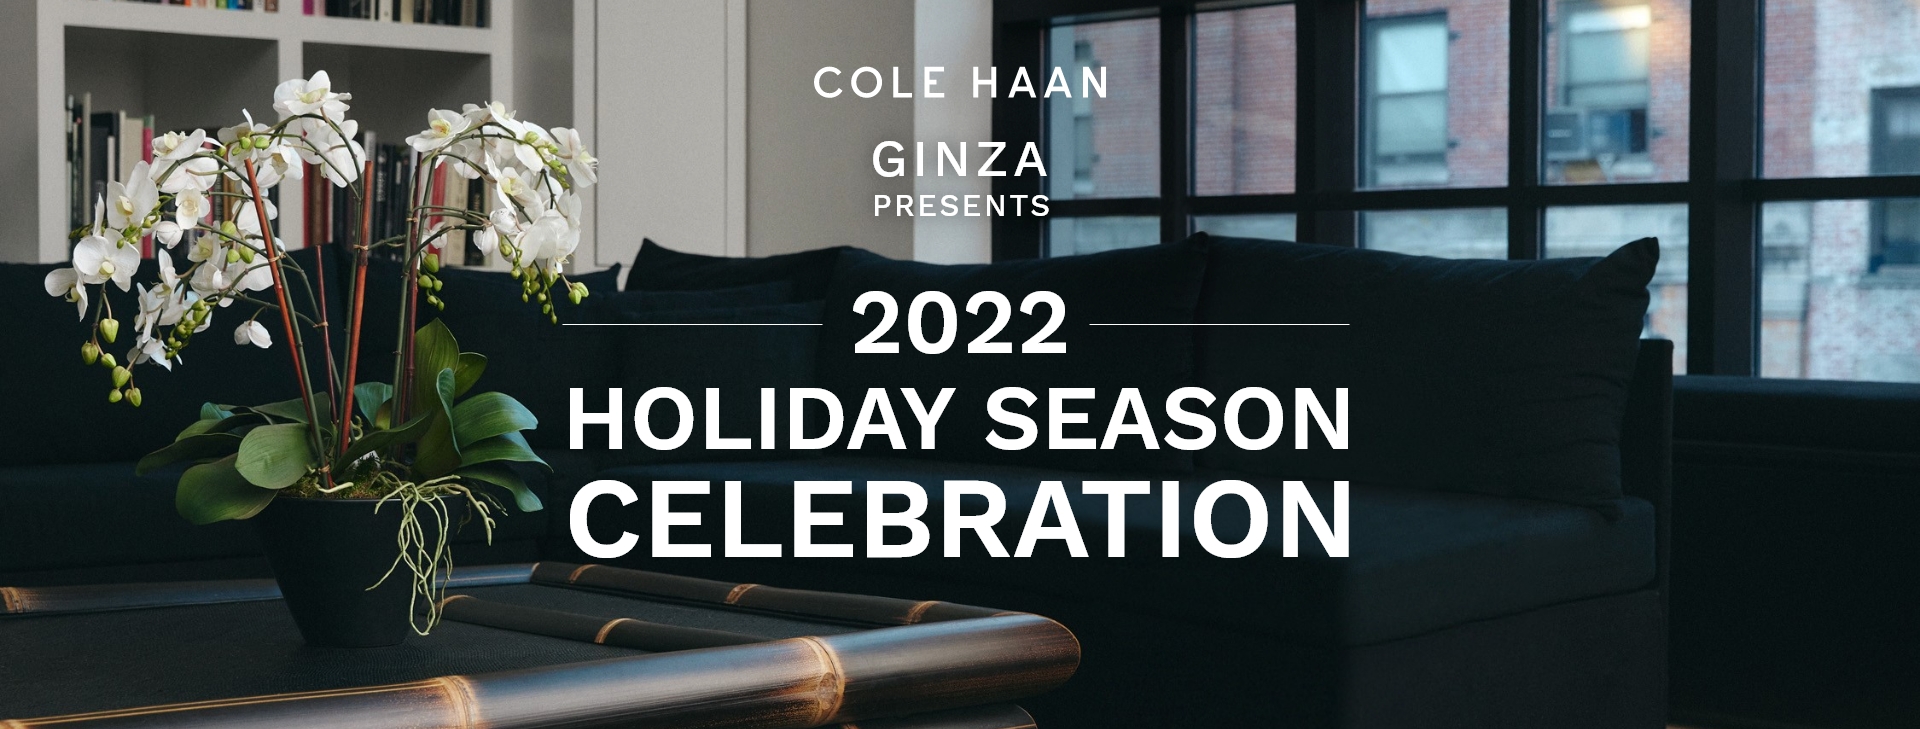 COLE HAAN GINZA PRESENTS 2022 HOLIDAY SEASONE CELEBRATION